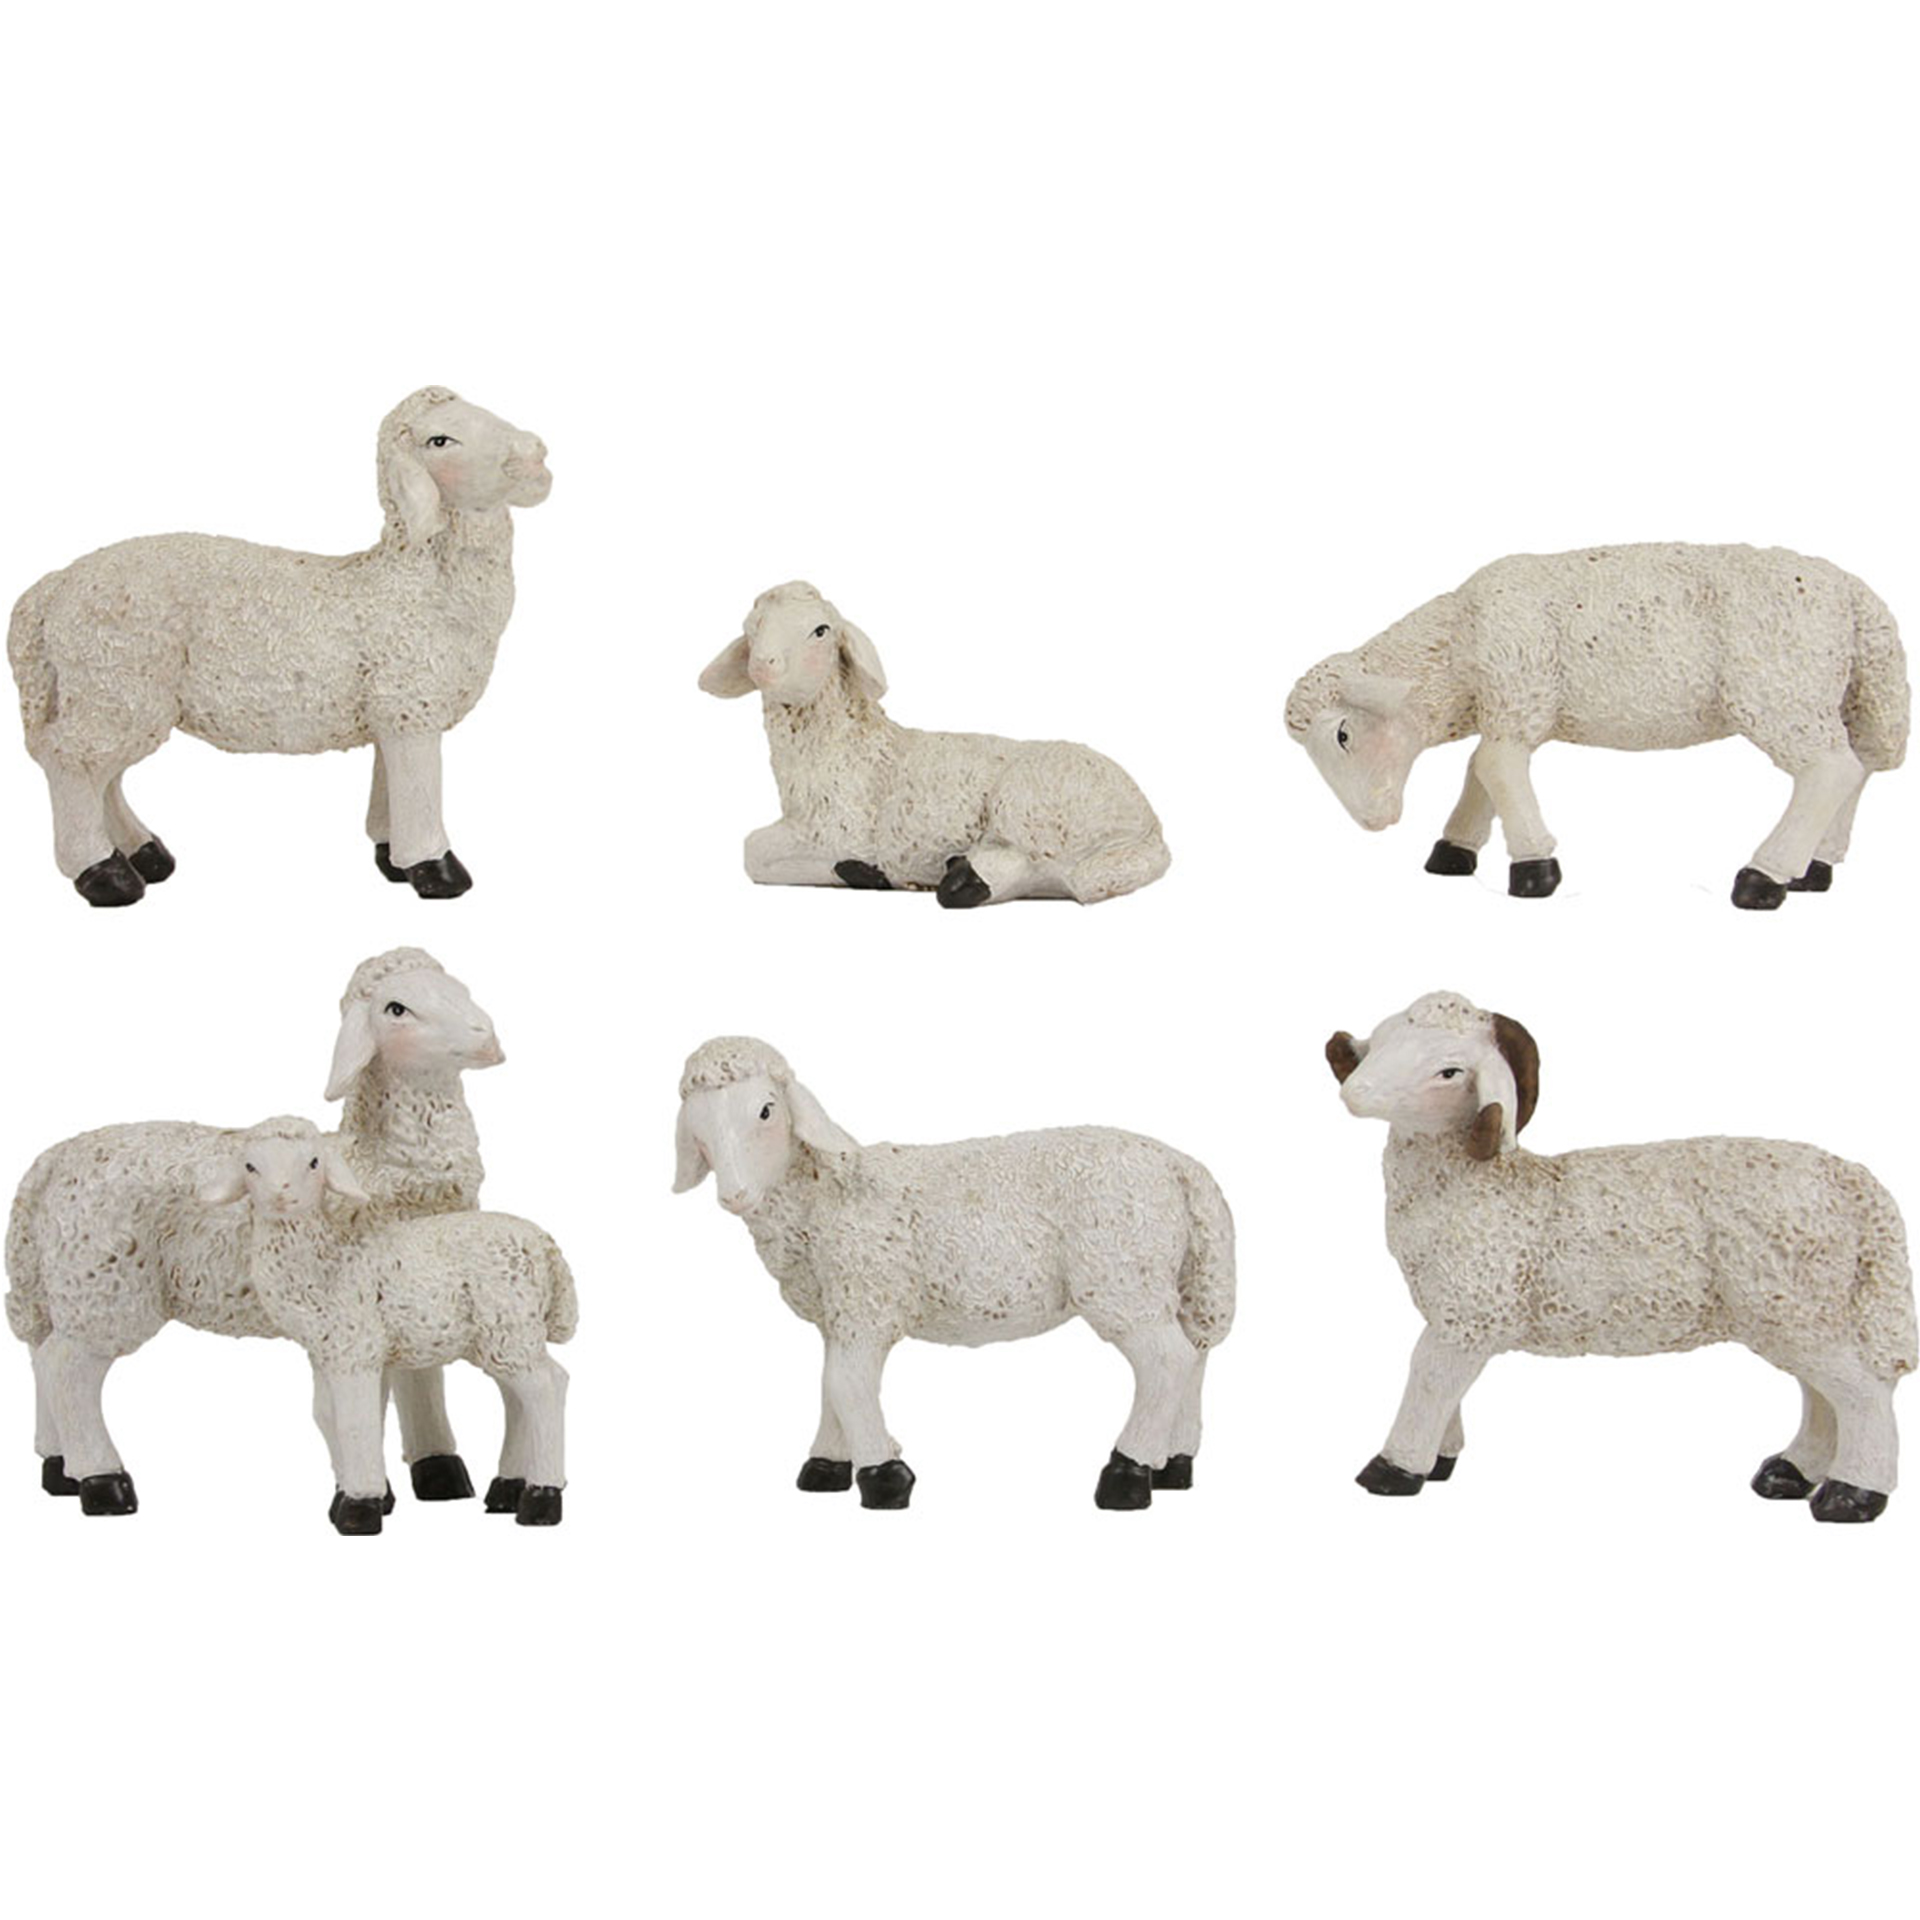 Schafe mit Widder Krippenfiguren Tierfiguren